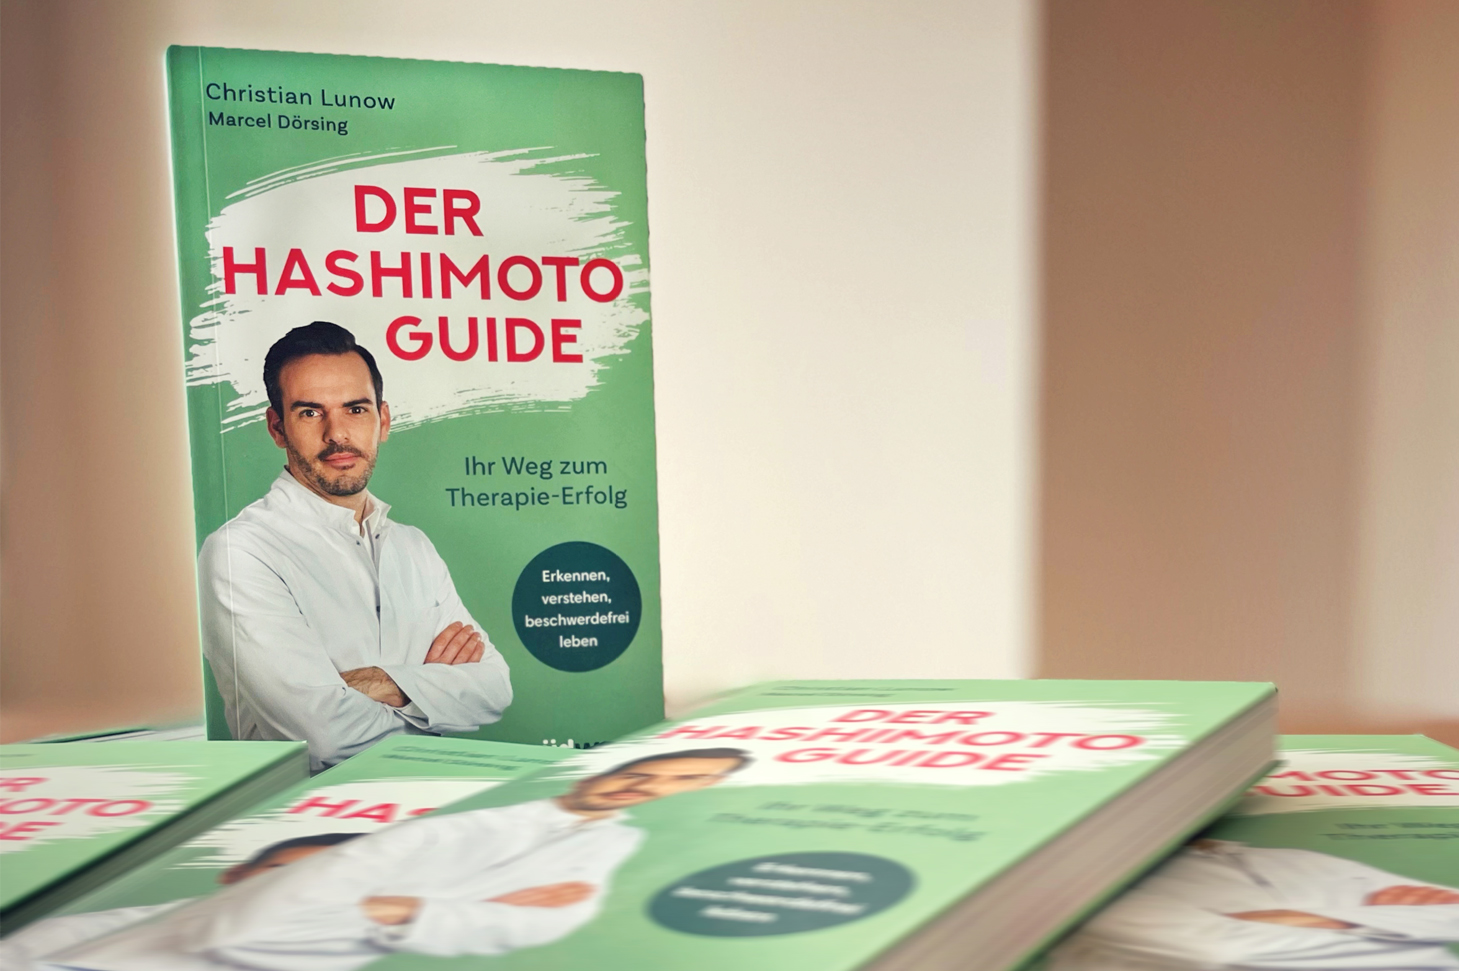 Hashimoto Guide von Dr. Christian Lunow